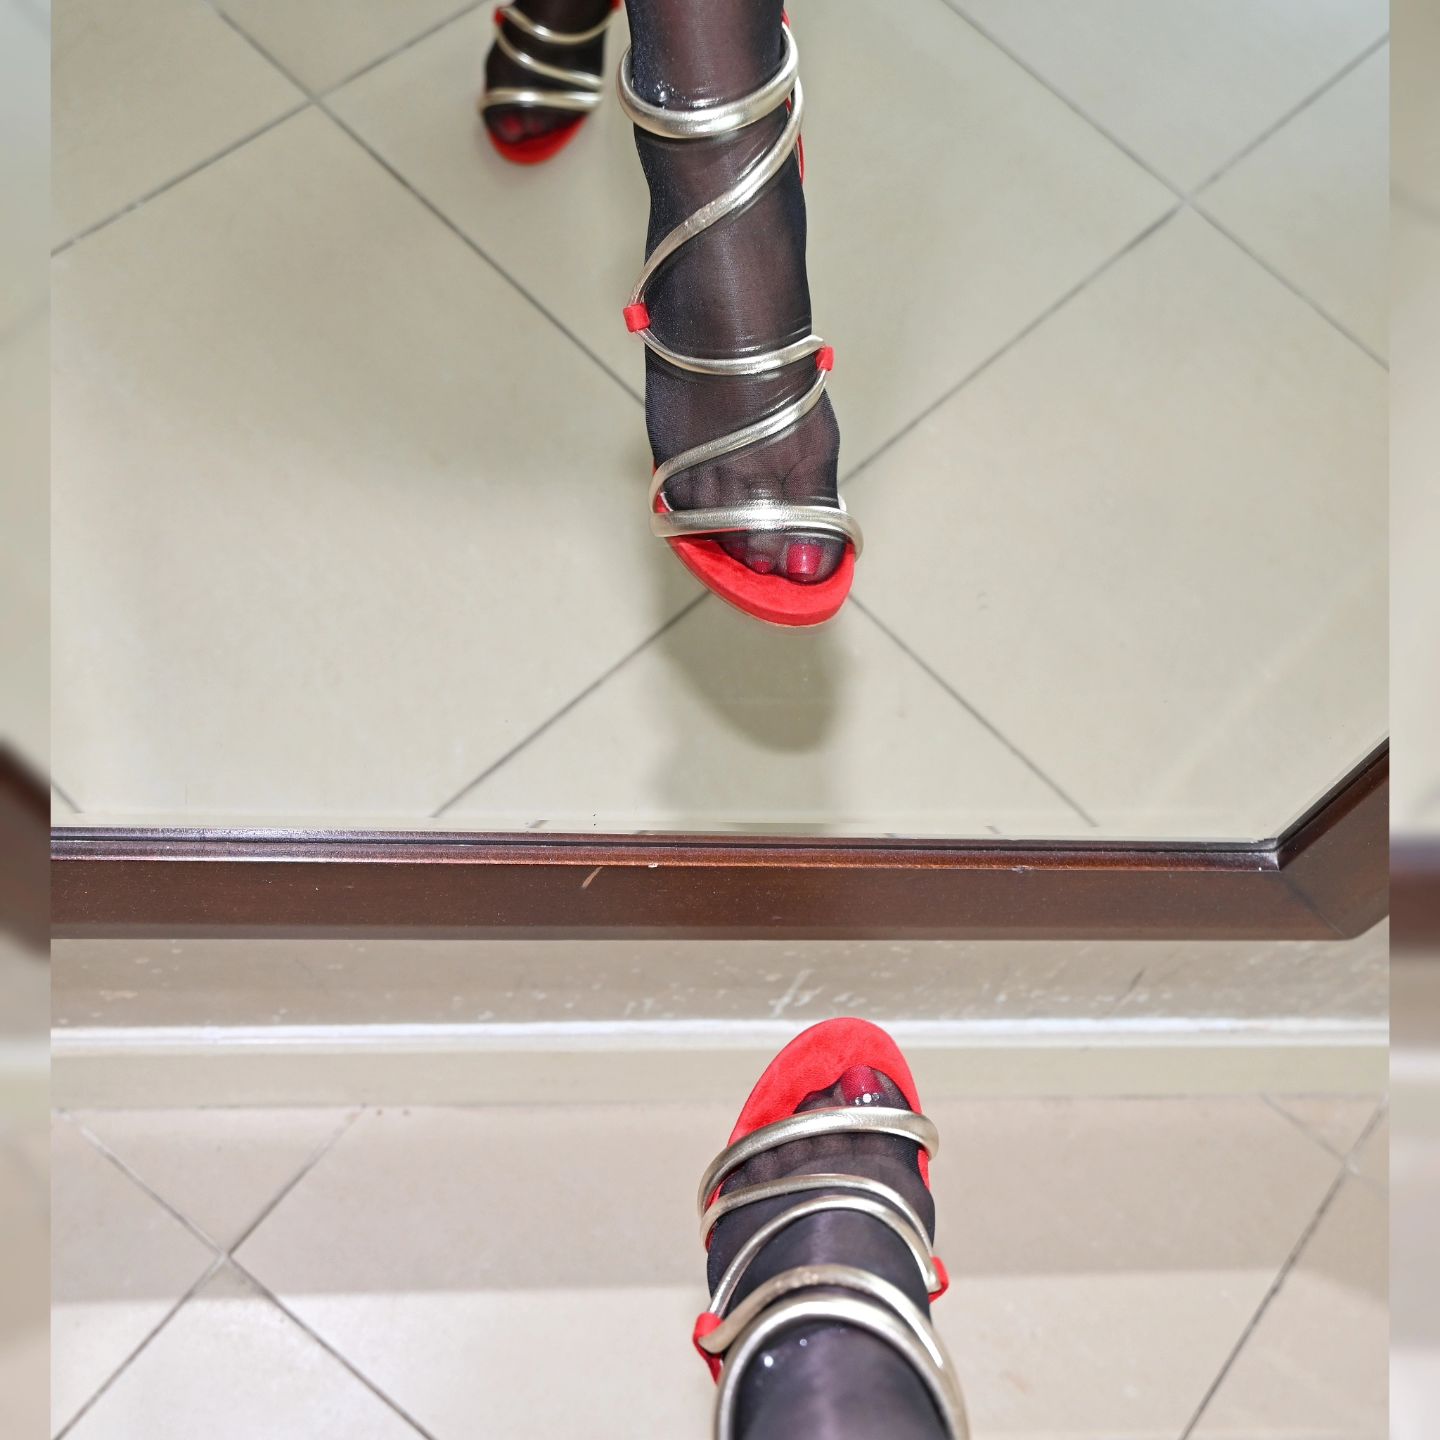 Dubai city tour - black mini dress + black stockings + black lingerie + gold-red high heels sandals